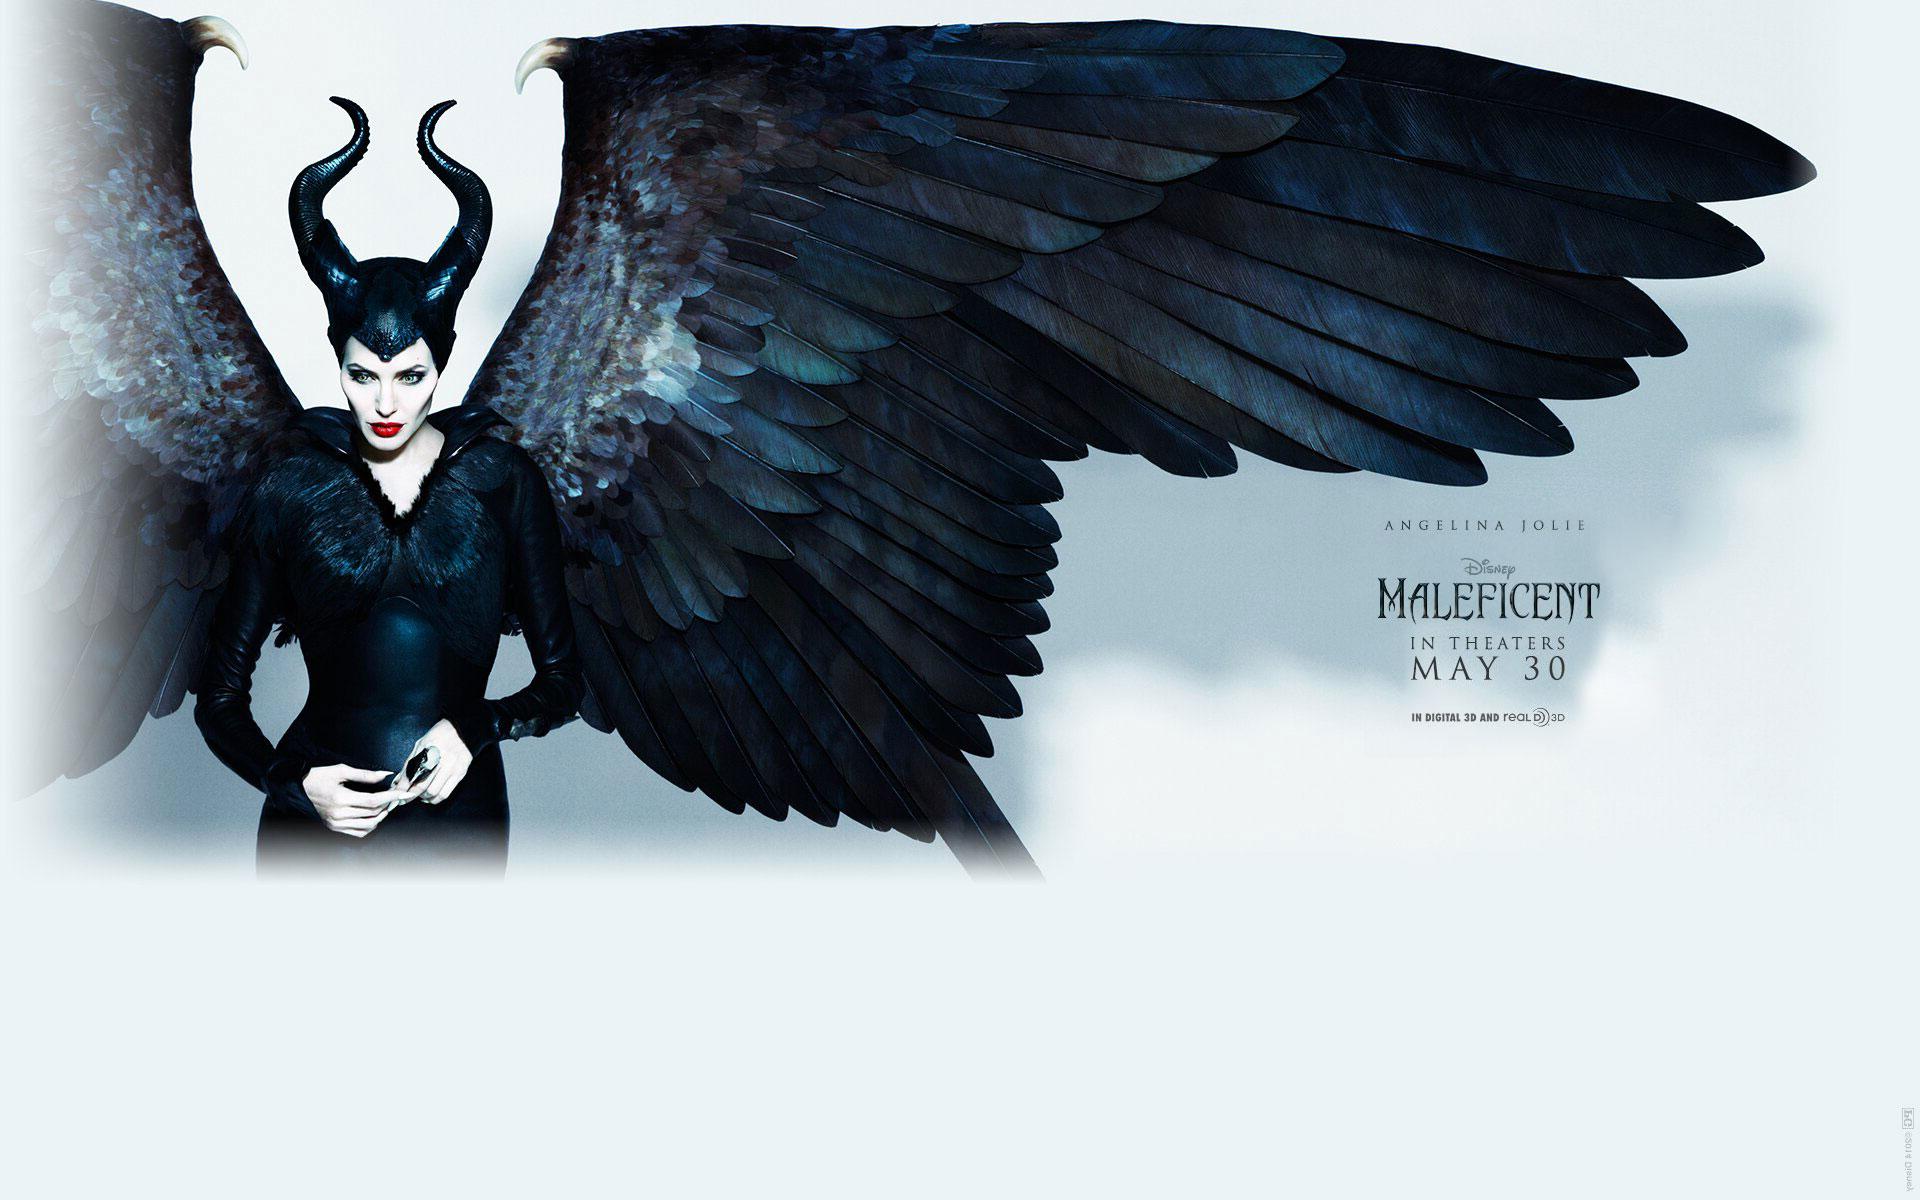 Maleficent Movie (2014) HD, iPad & iPhone Wallpaper